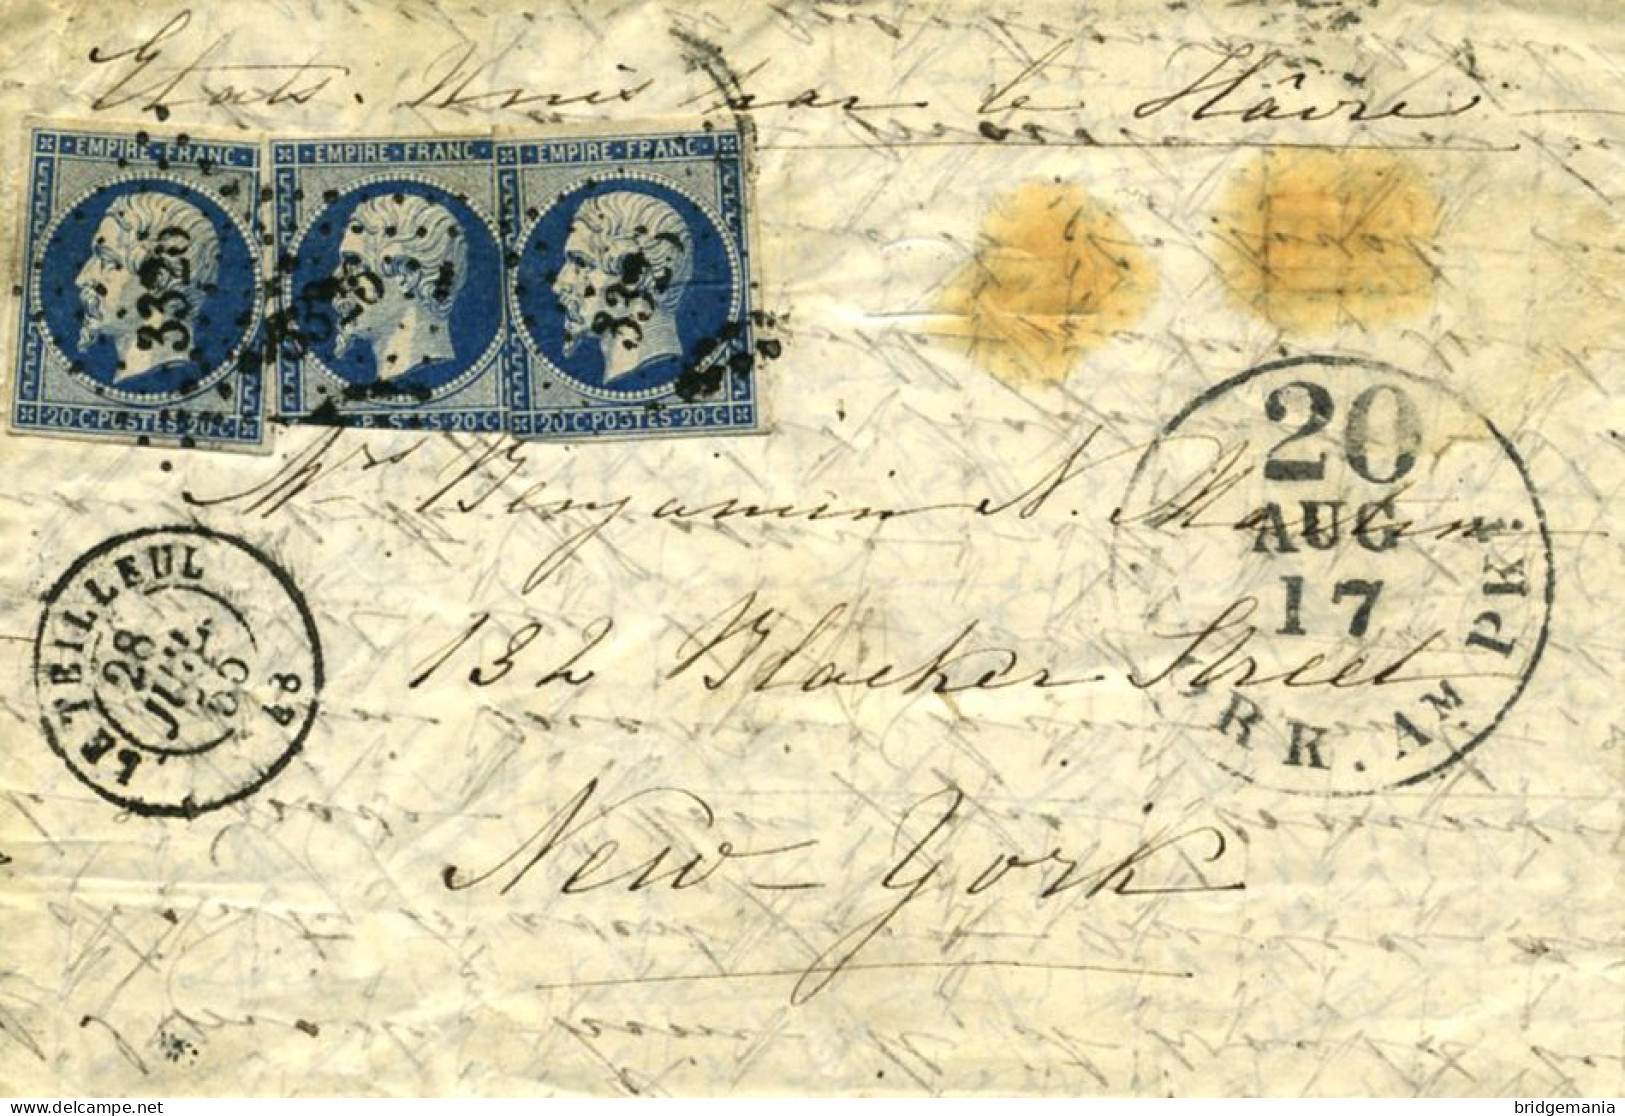 MTM130 - 1855 TRANSATLANTIC LETTER FRANCE TO USA STEAMER UNION THE HAVRE LINE - Postal History